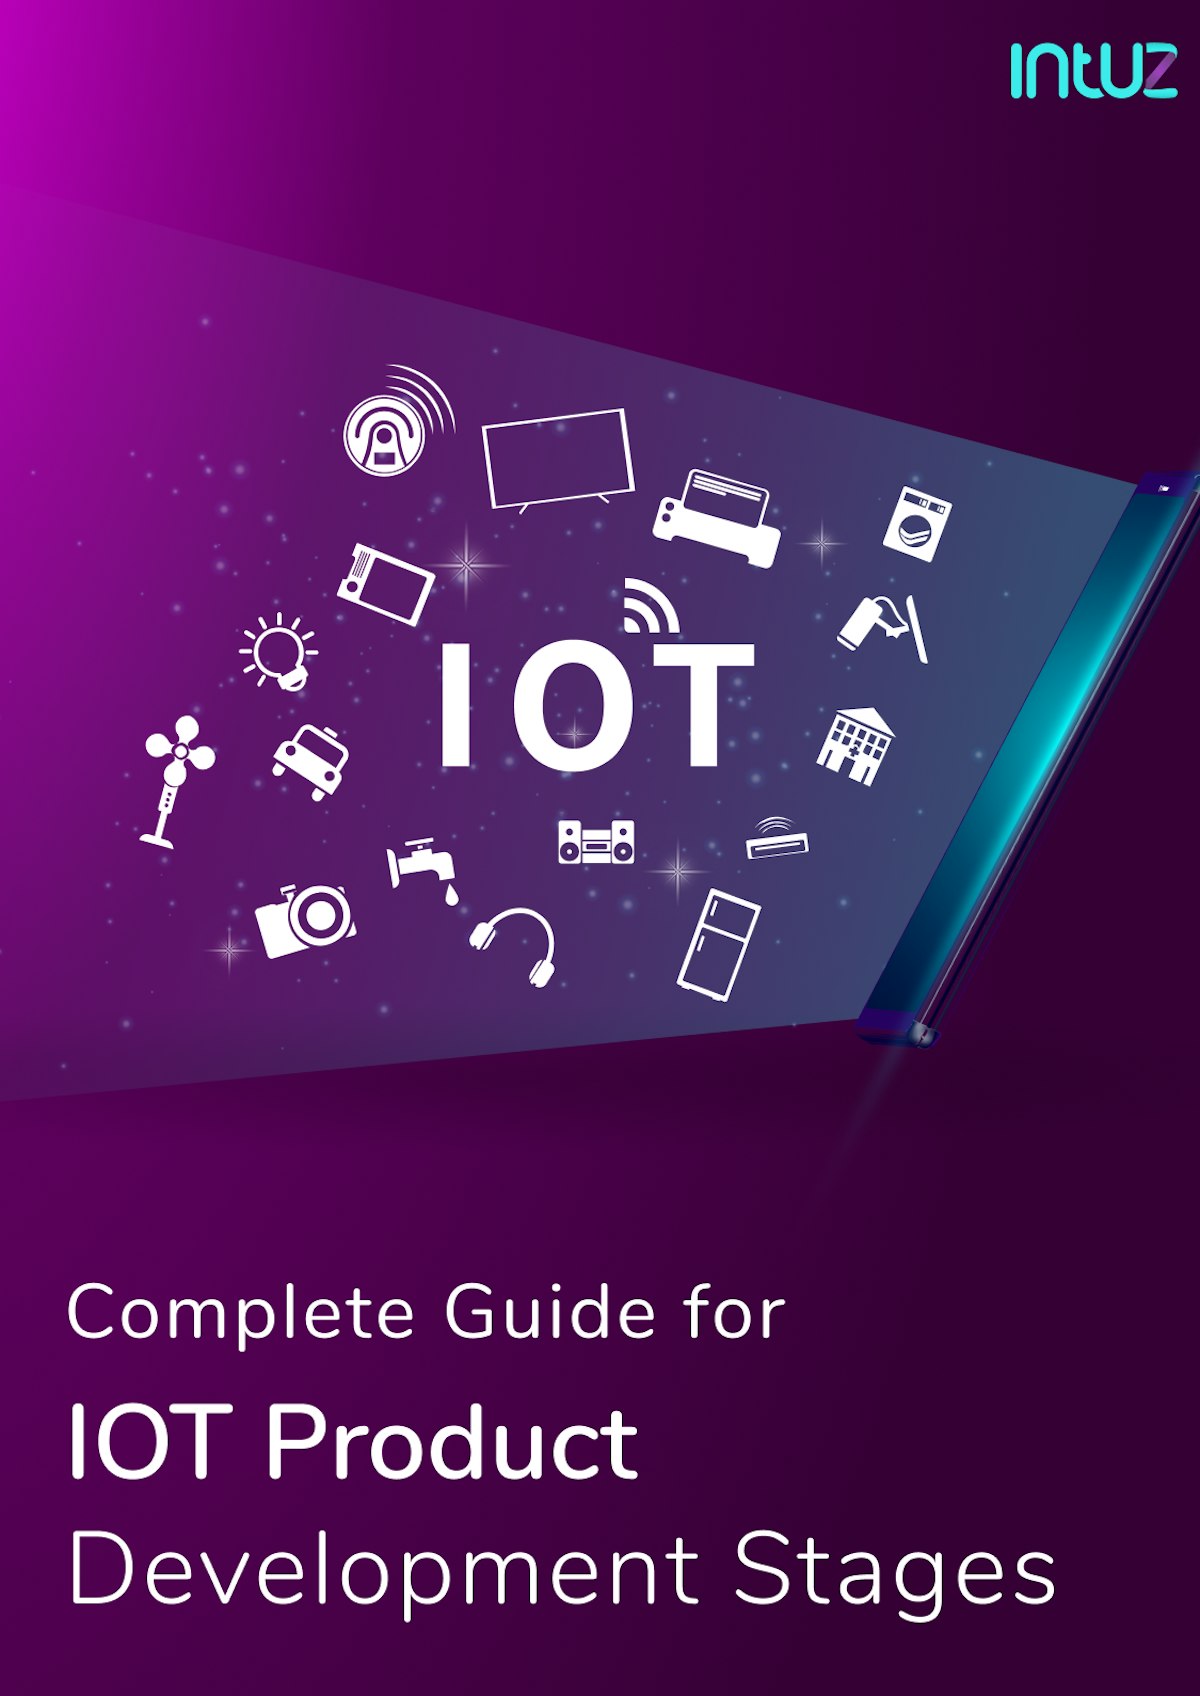 IoT Product development guide - Intuz